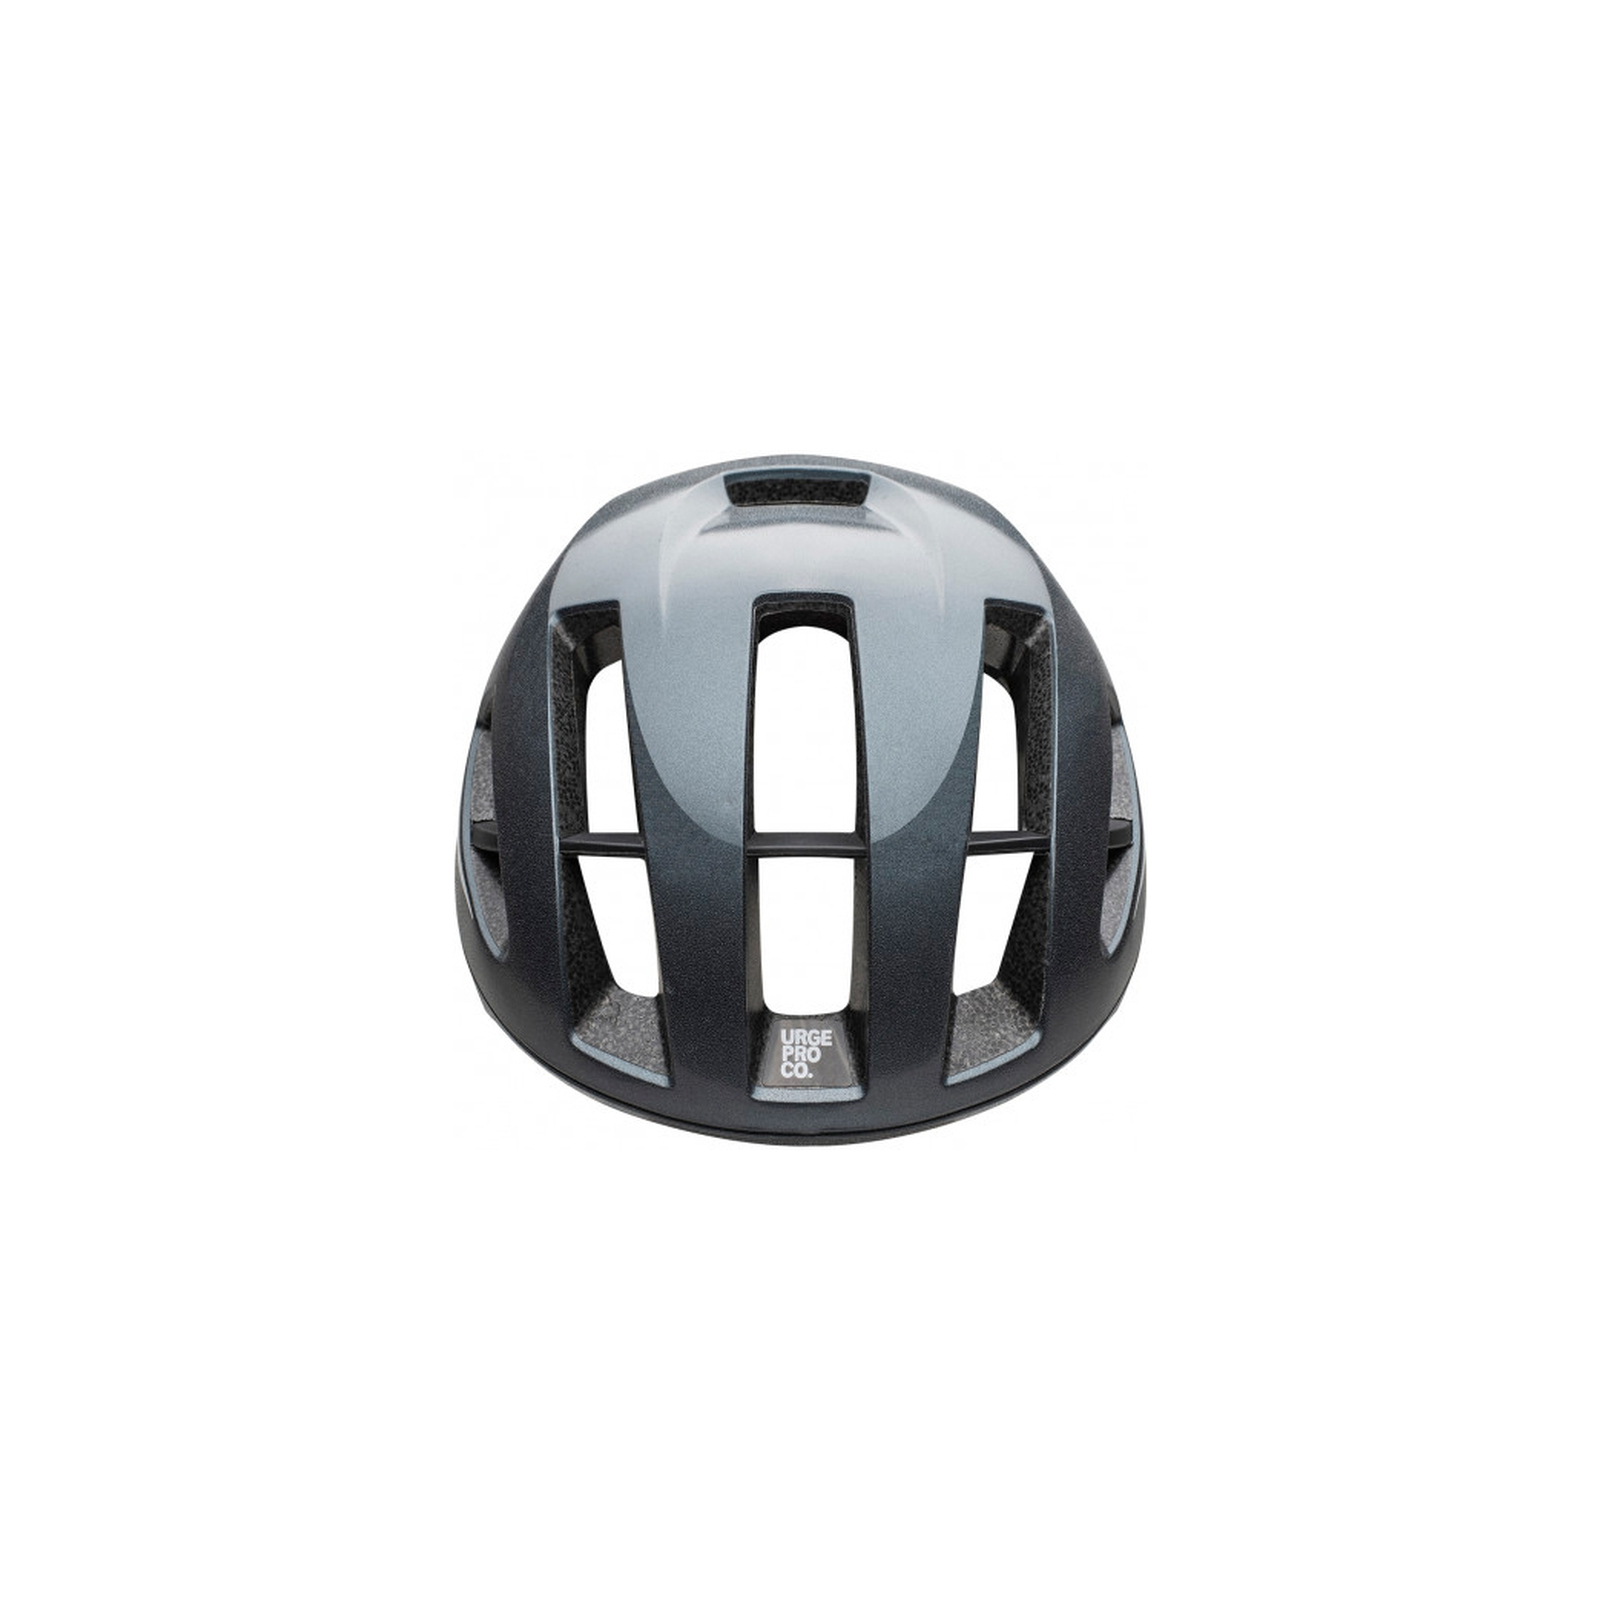 Шлем Urge Papingo Світлоповертальний S/M 54-58 см (UBP22241M) изображение 4